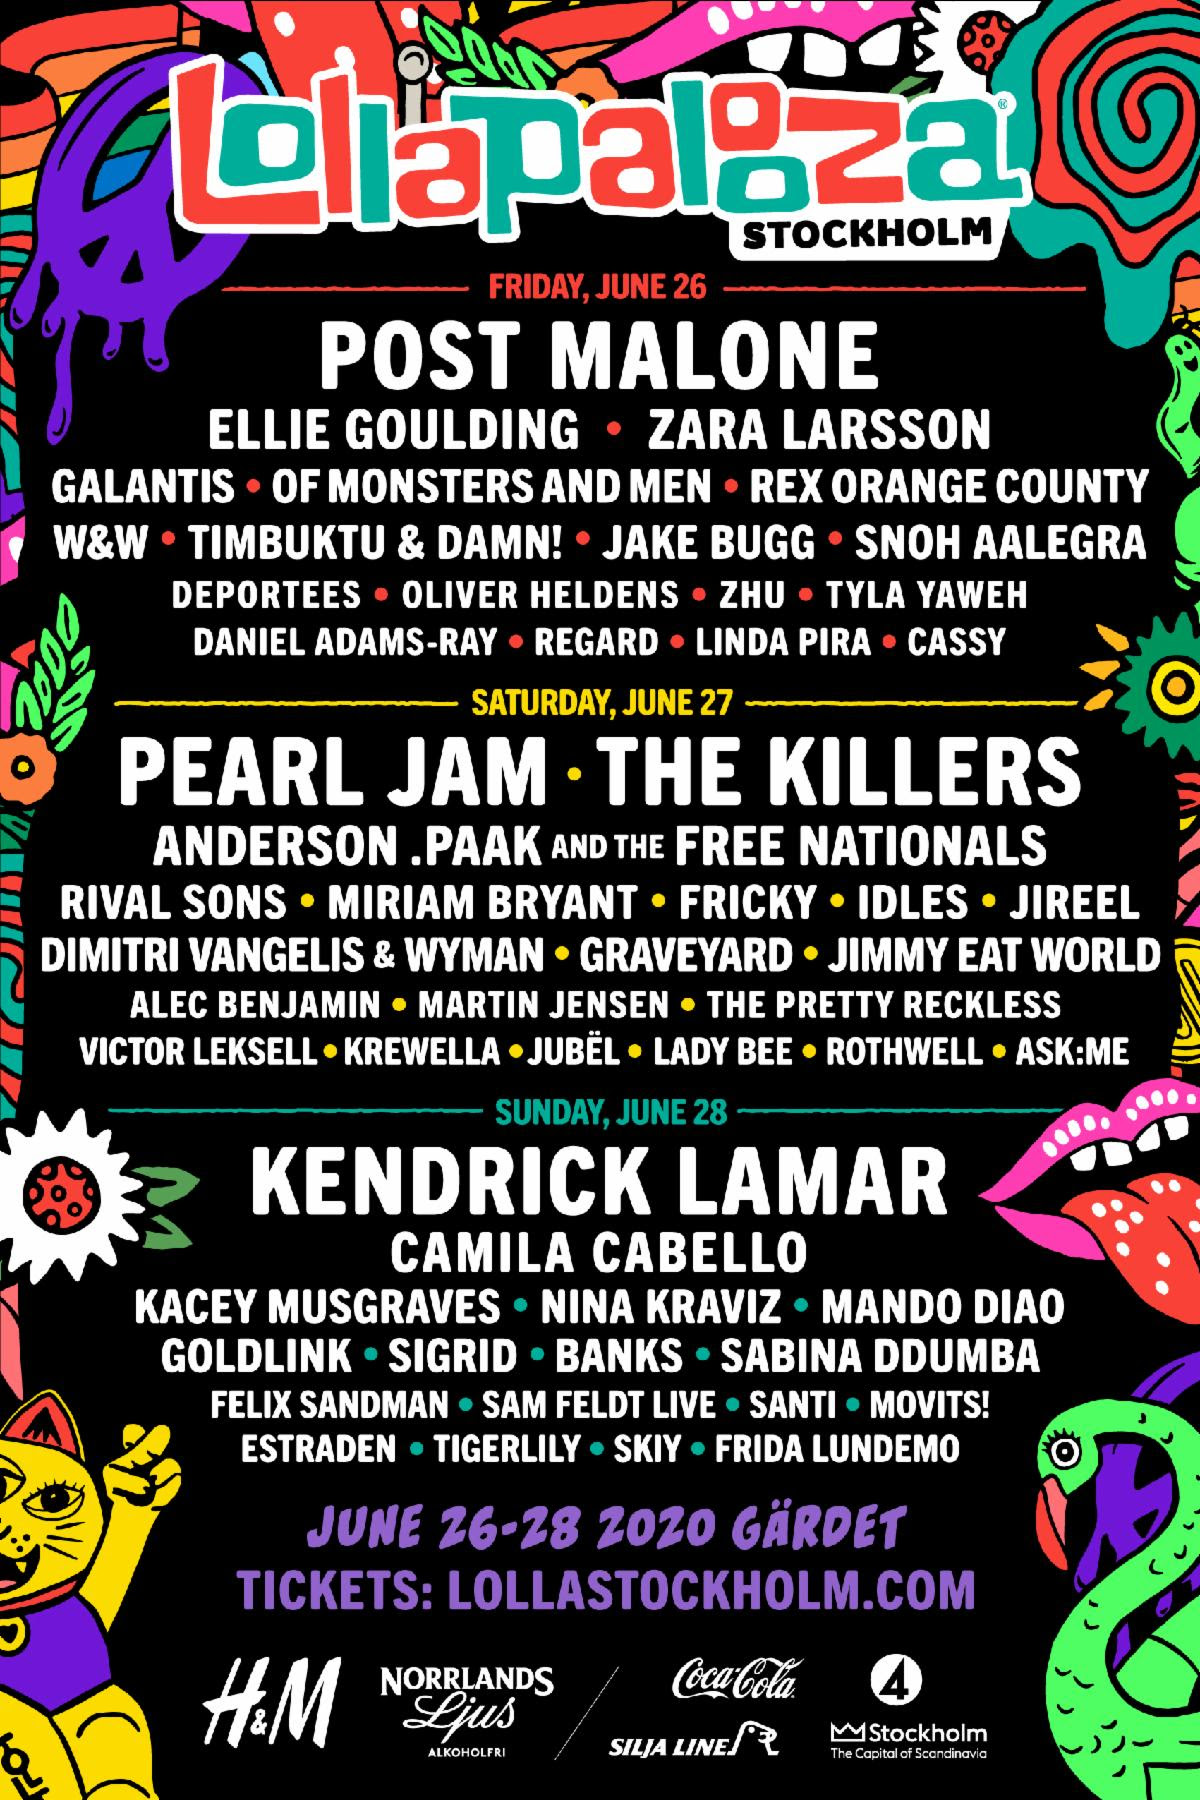 Lollapalooza Stockholm Announces 2020 Lineup Featuring Kendrick Lamar